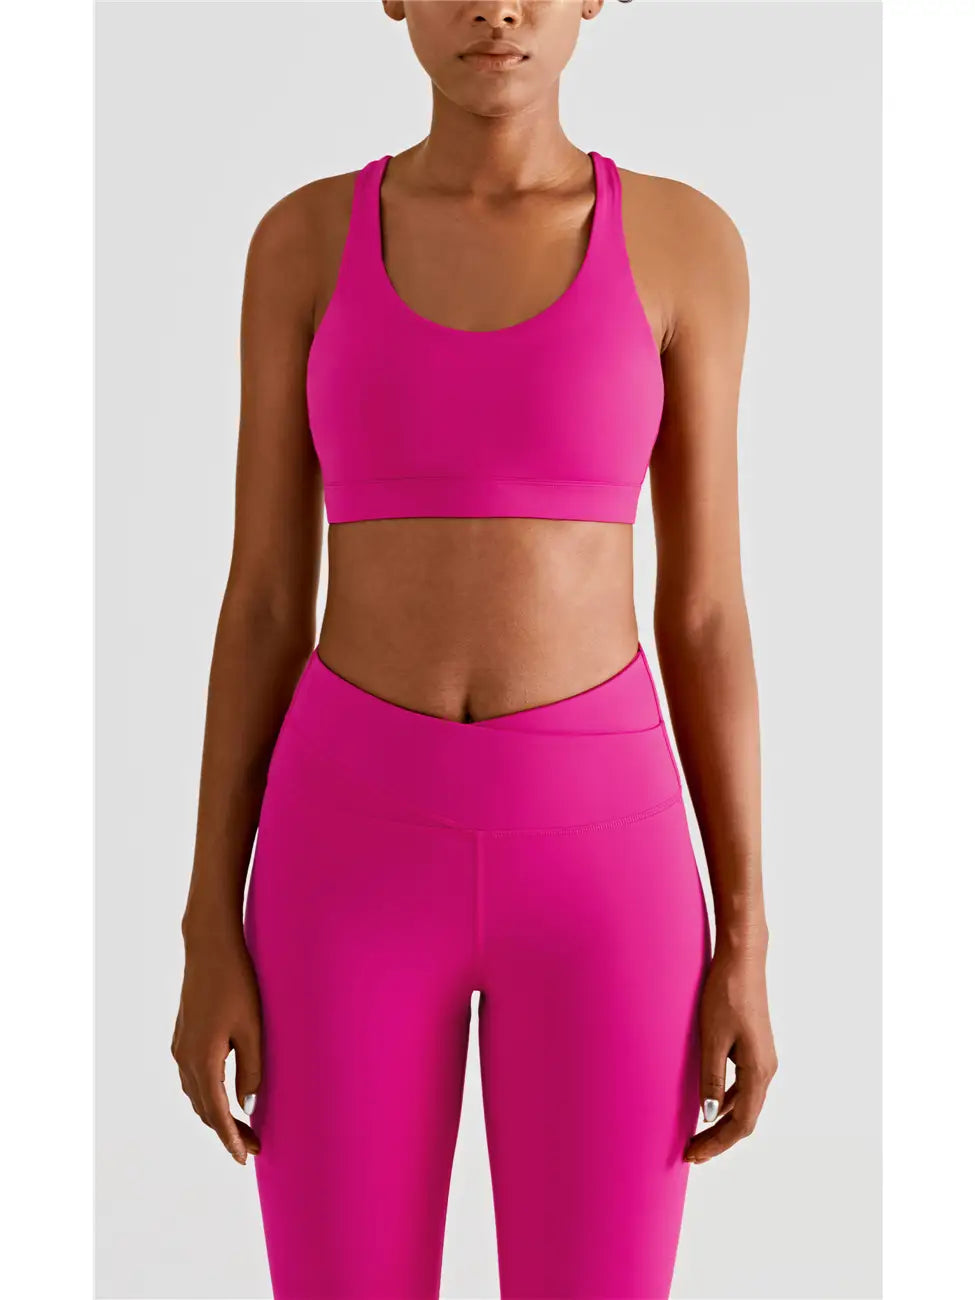 Youth Hot Pink Strappy Racerback Sports Bra – Lily's Dancewear